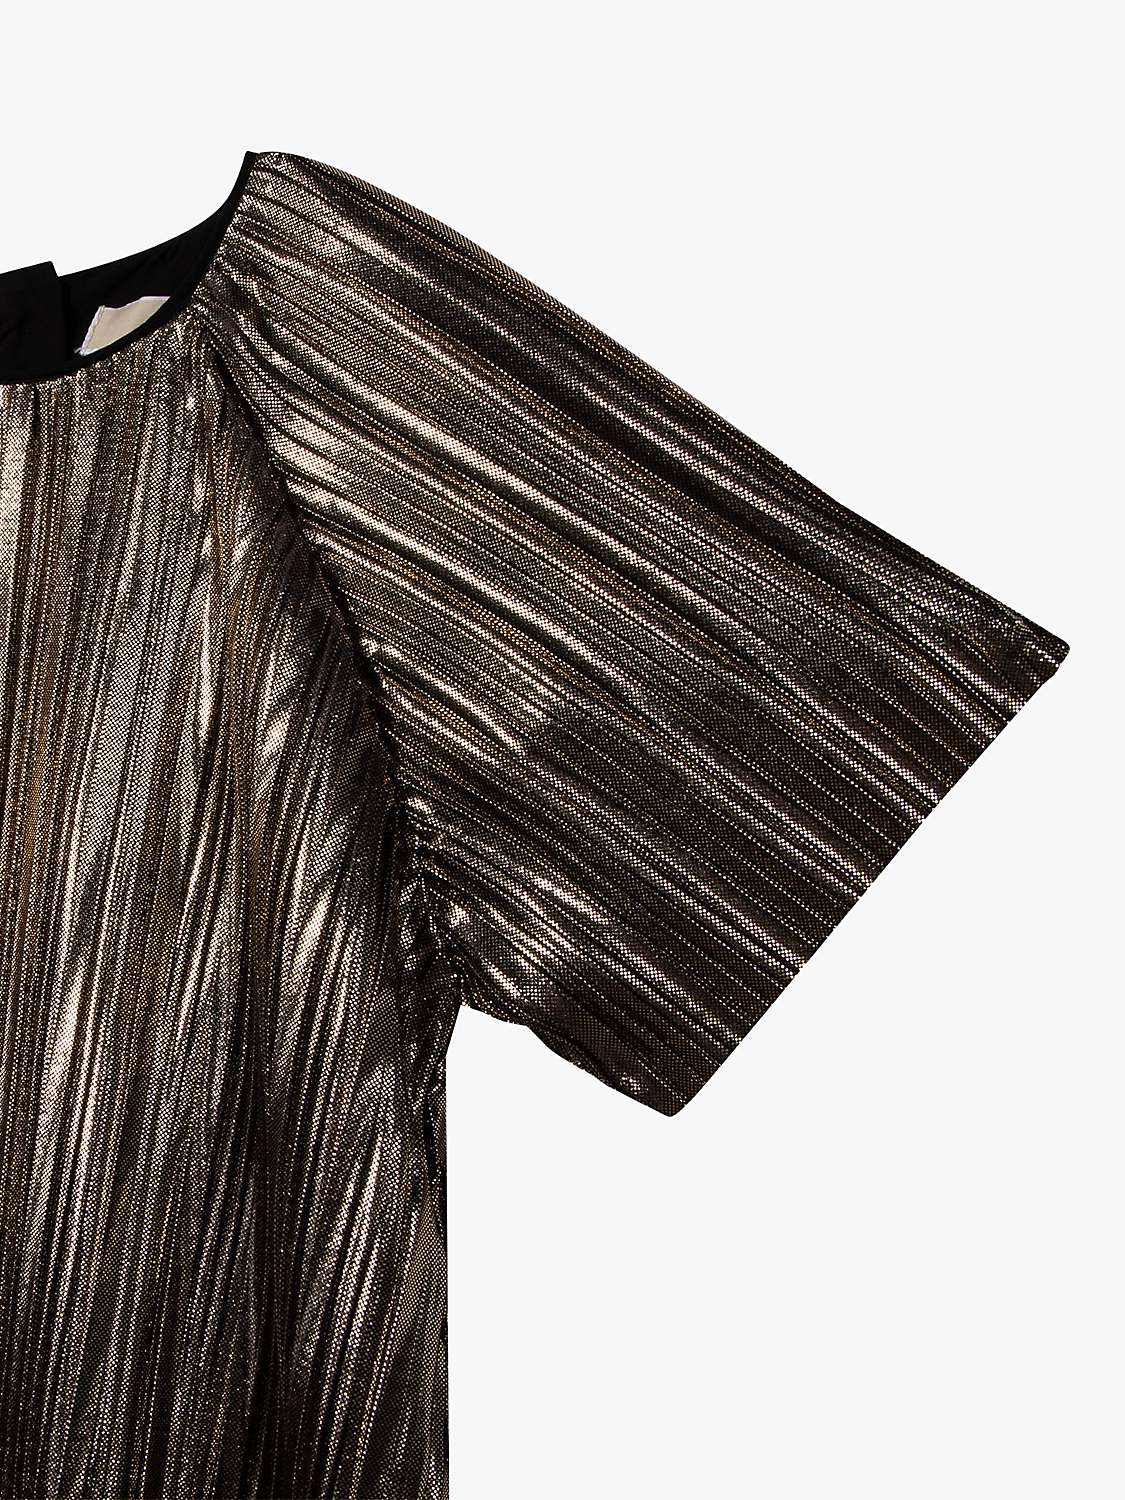 Buy Michael Kors Kids' Metallic Pleated Party Dress, Gold Online at johnlewis.com